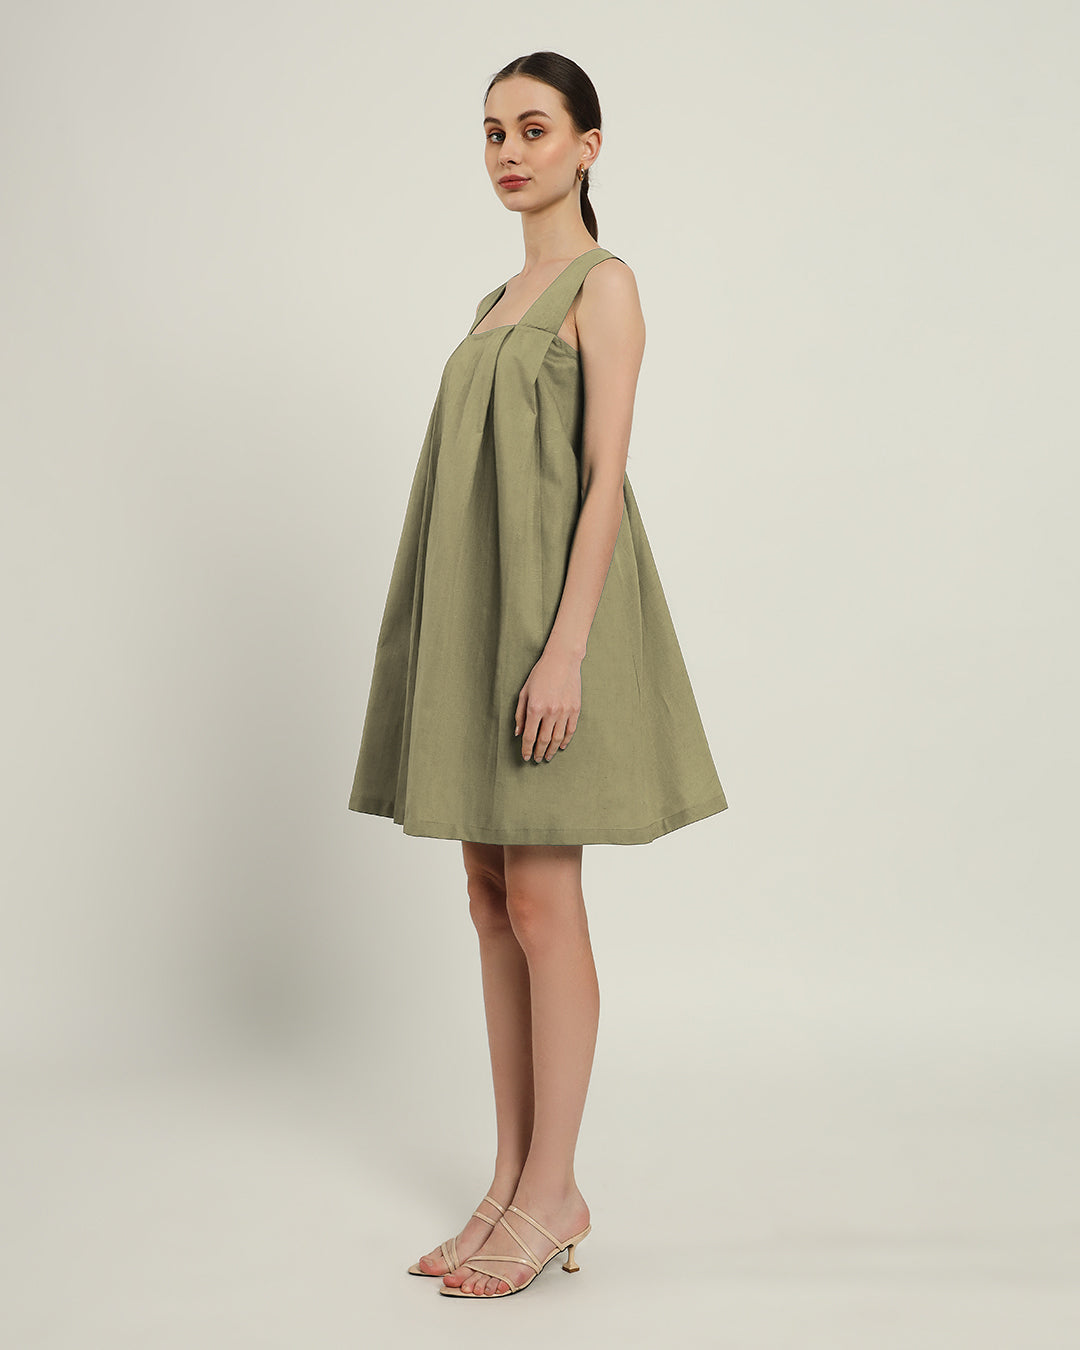 The Larissa Daisy Olive Linen Dress